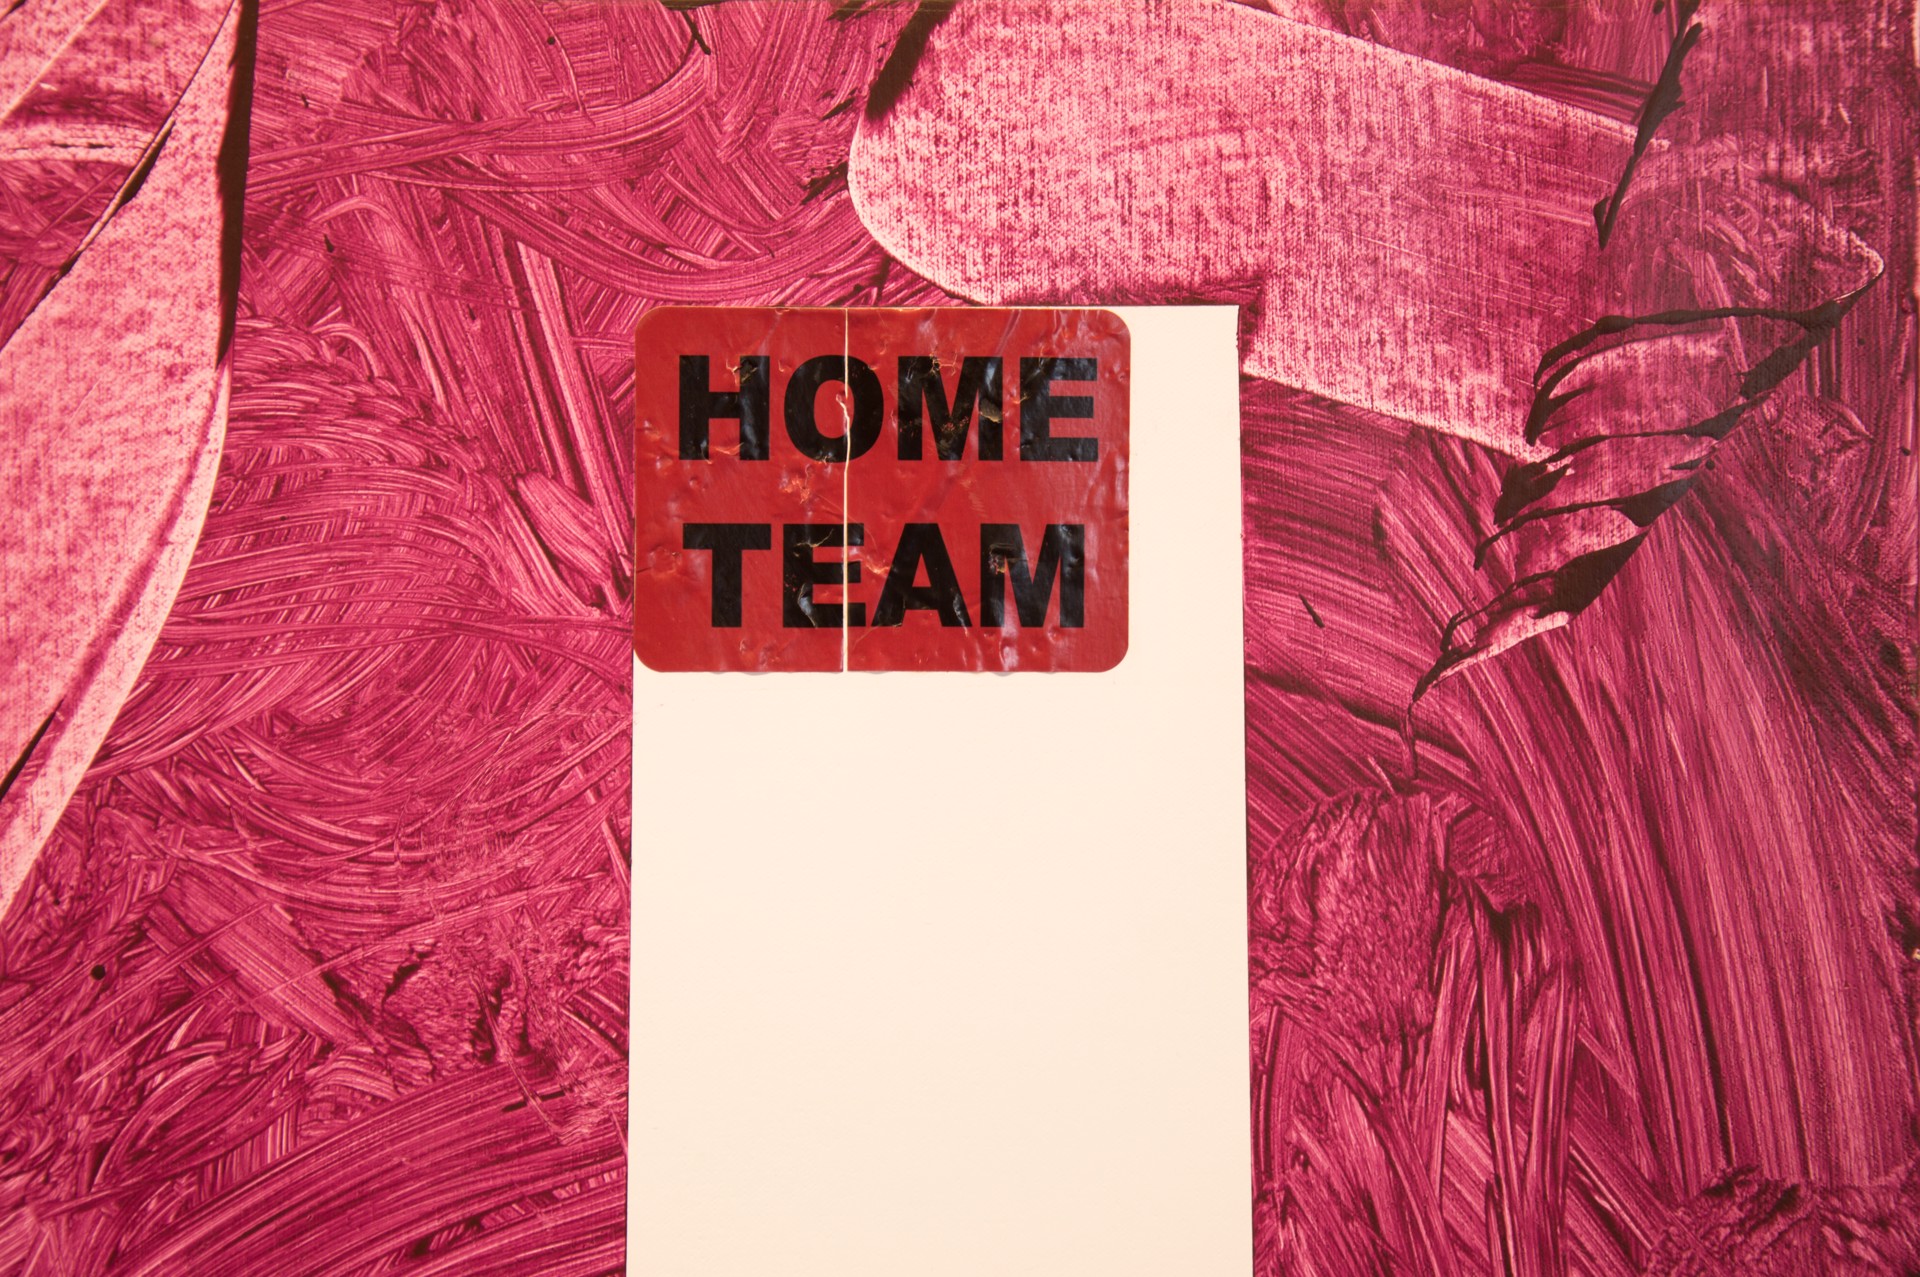 Home Team 117 by Will Crutchfield